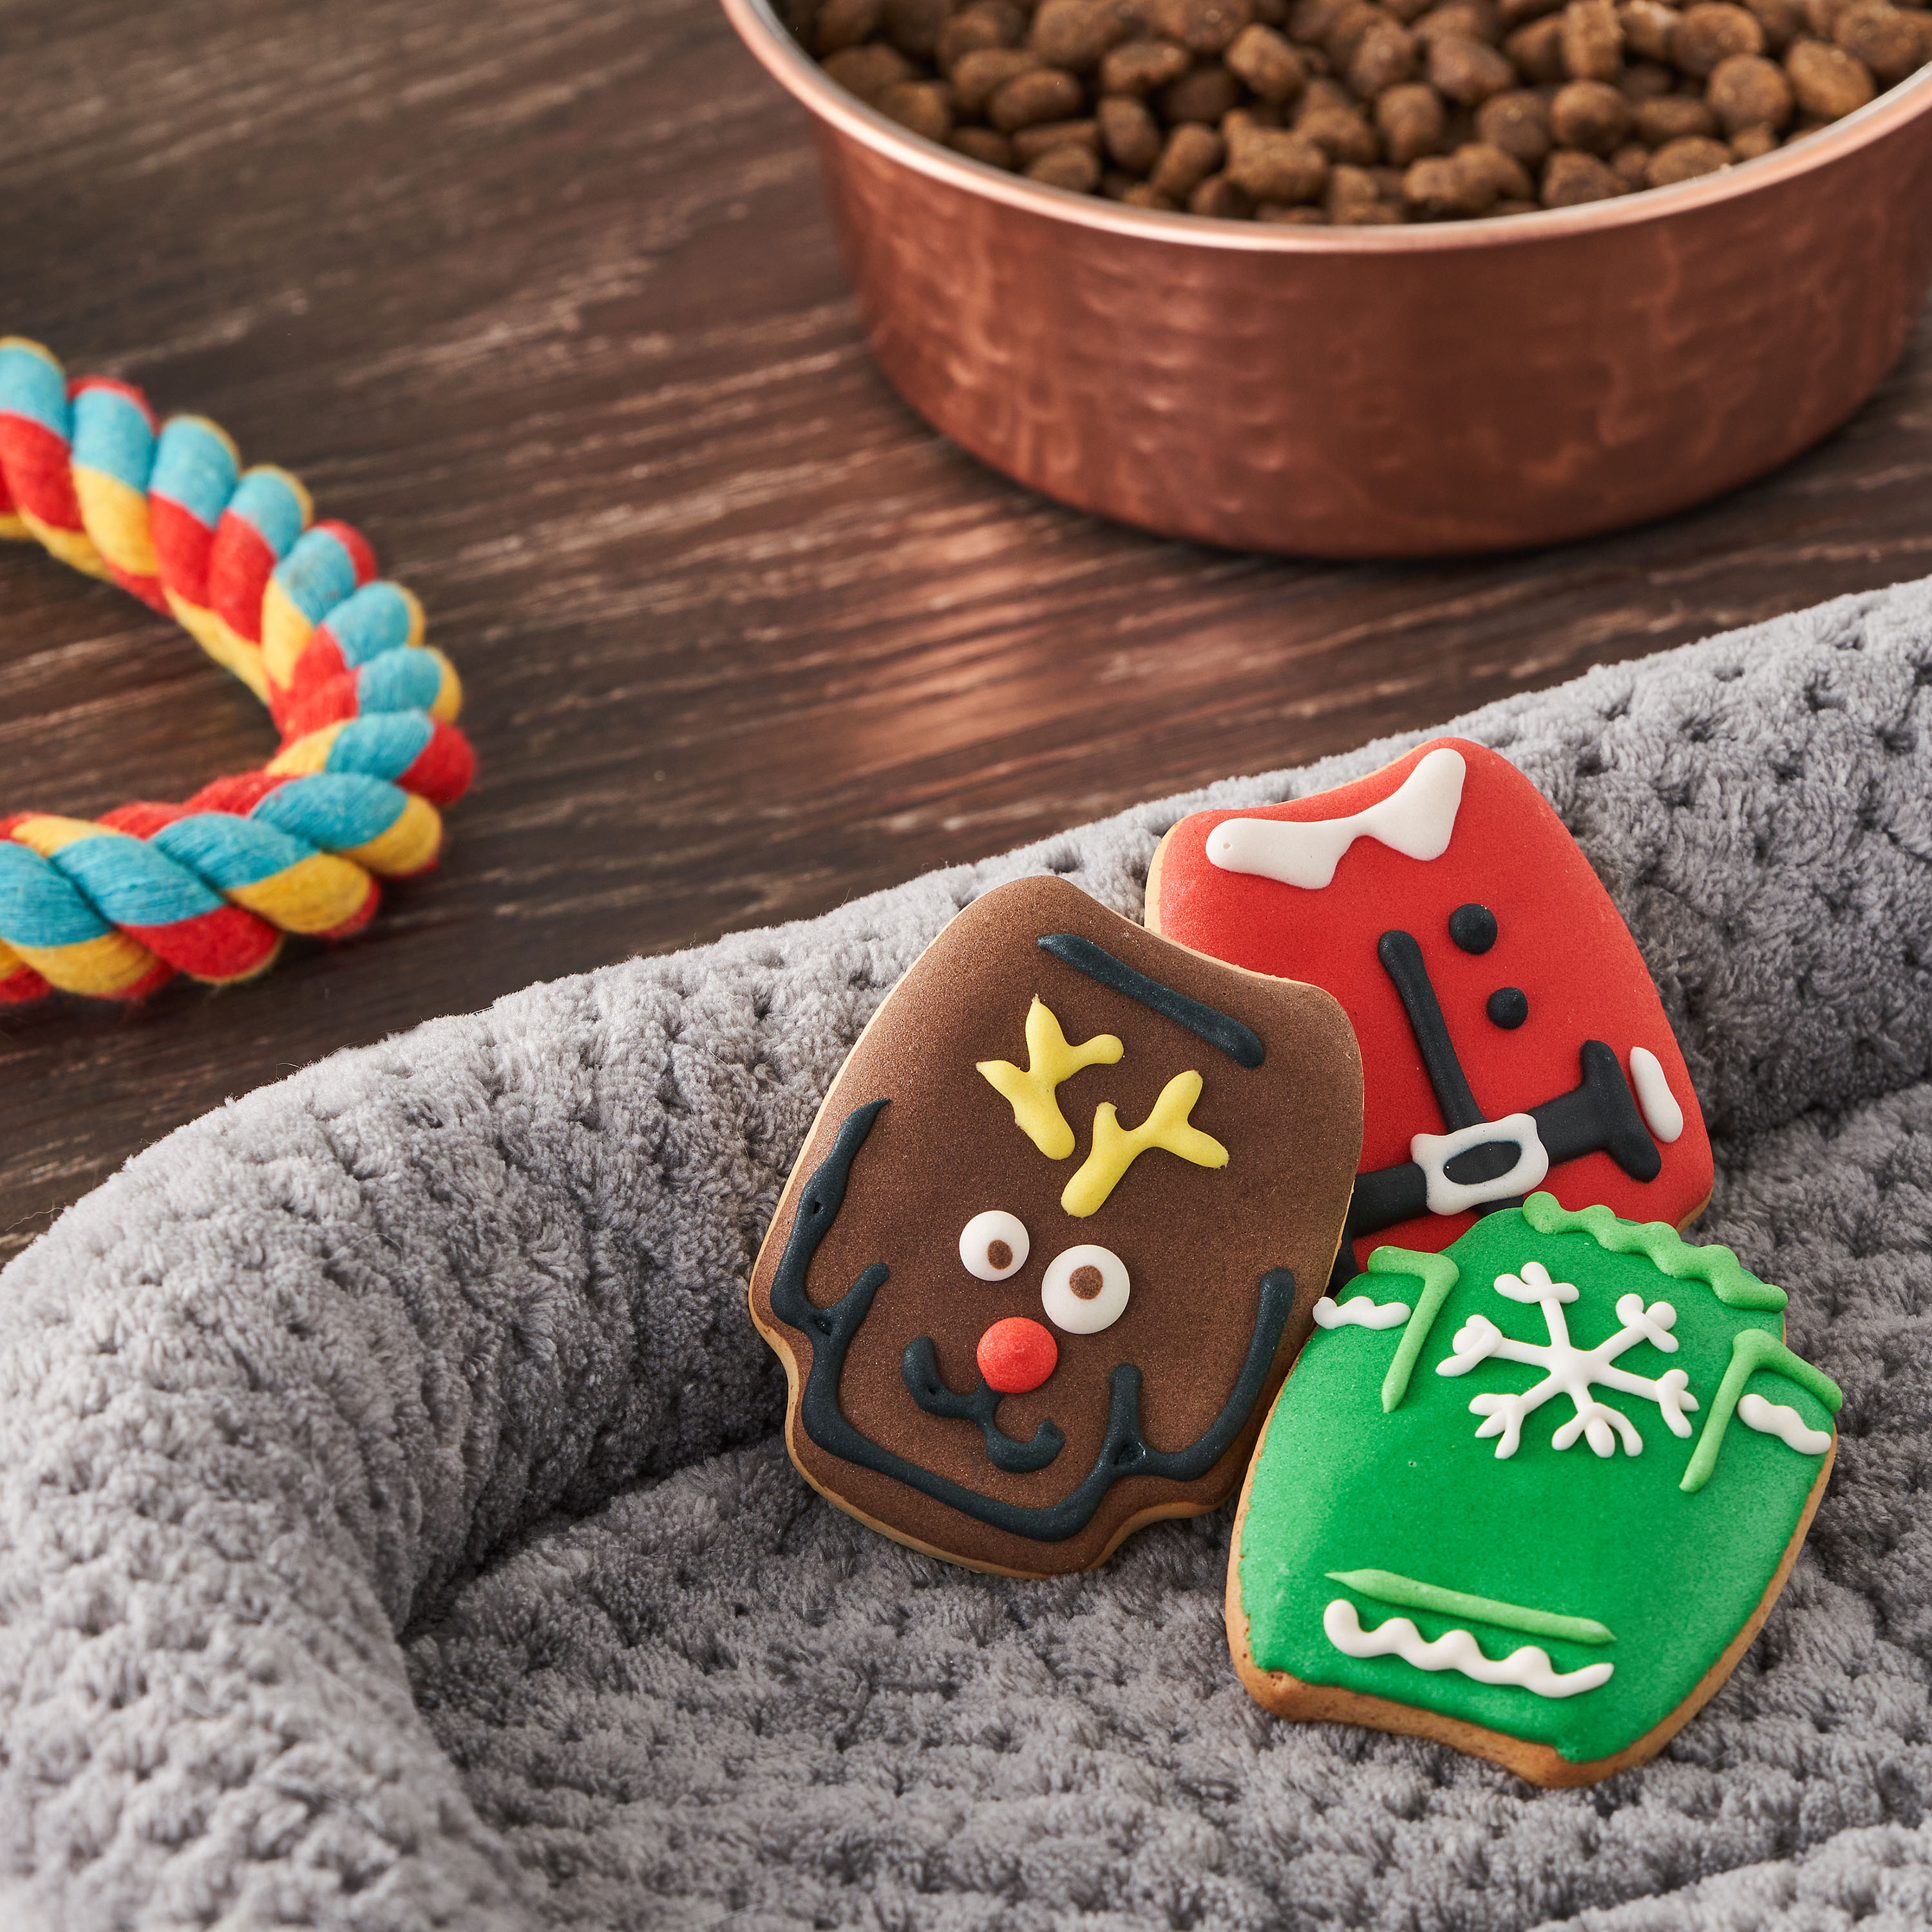 Christmas Cookie Dog Treats, 9.52 oz, 9 Count